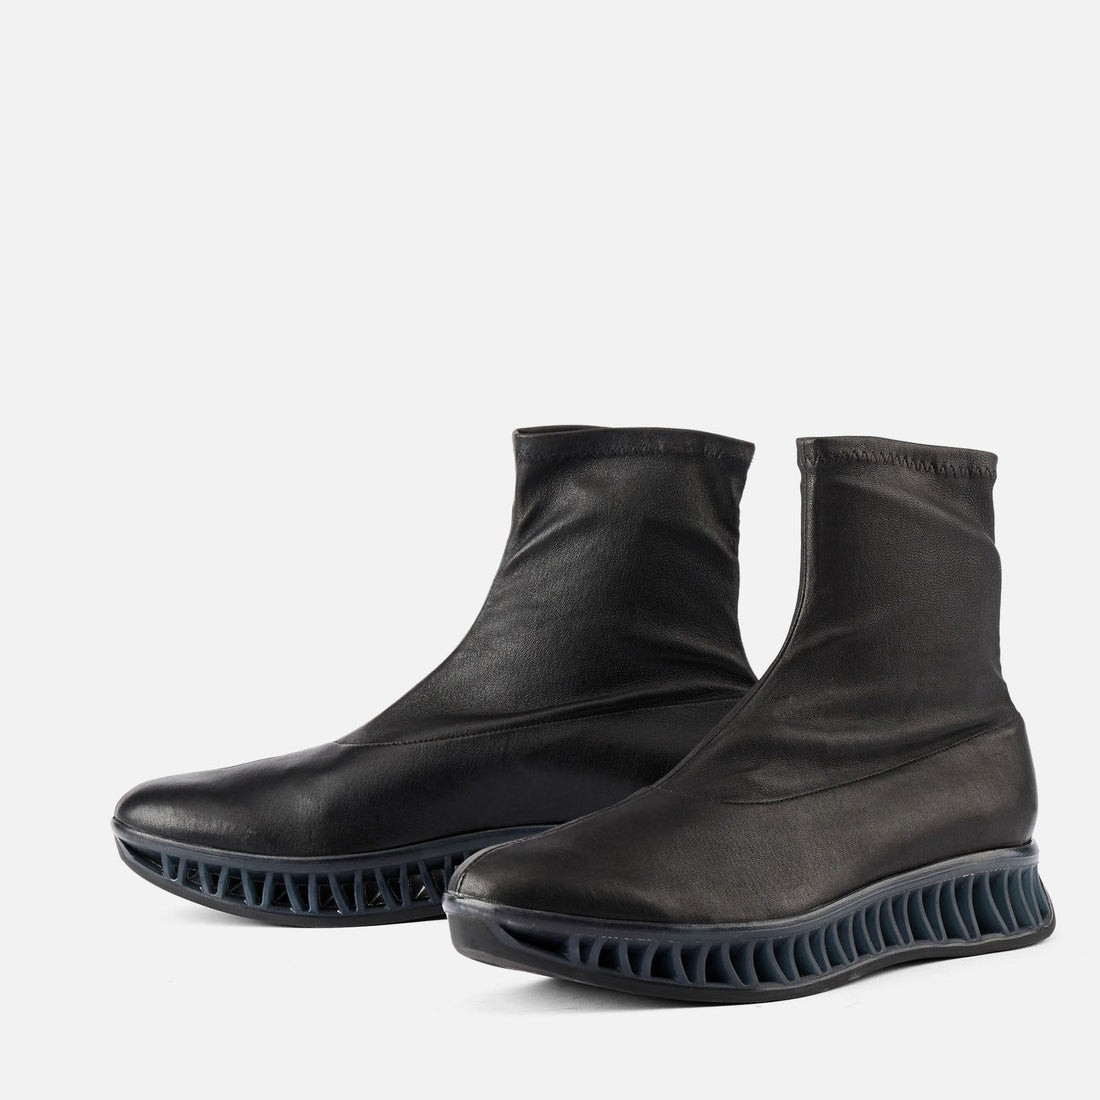 ANKLE BOOTS - MILES ankle boots, black || OUTLET - MILESBLKNPSM360 - Clergerie Paris - USA